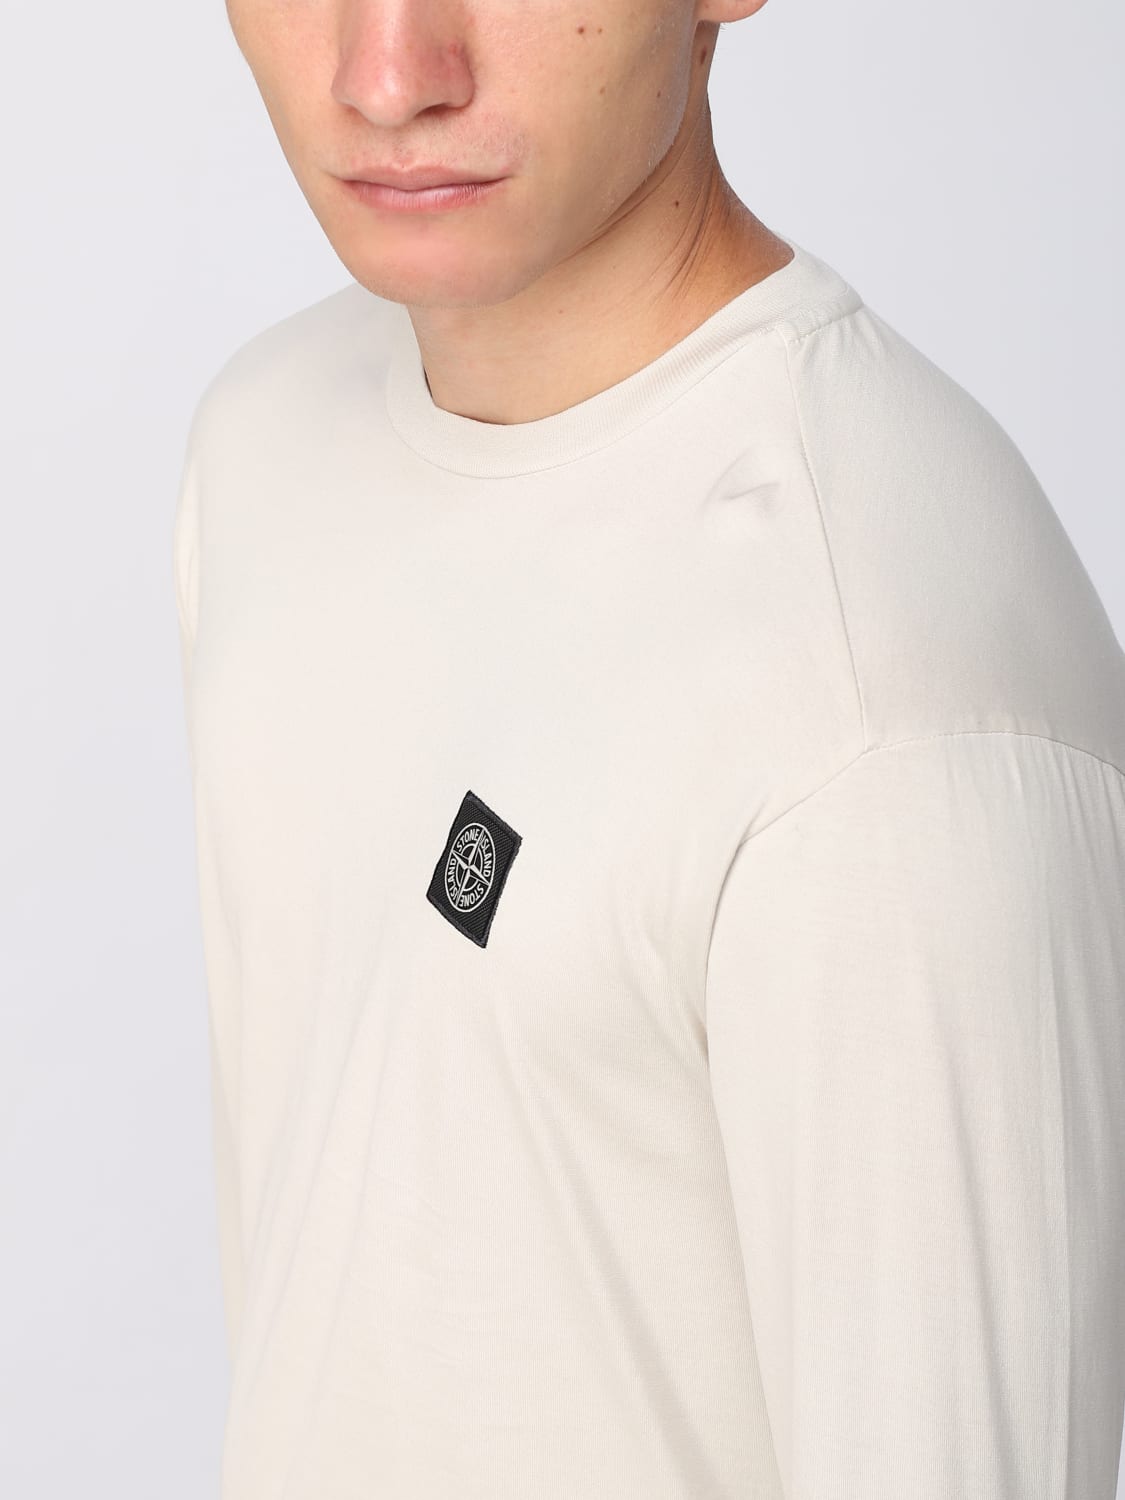 STONE ISLAND: t-shirt for man - White | Stone Island t-shirt 22713 ...